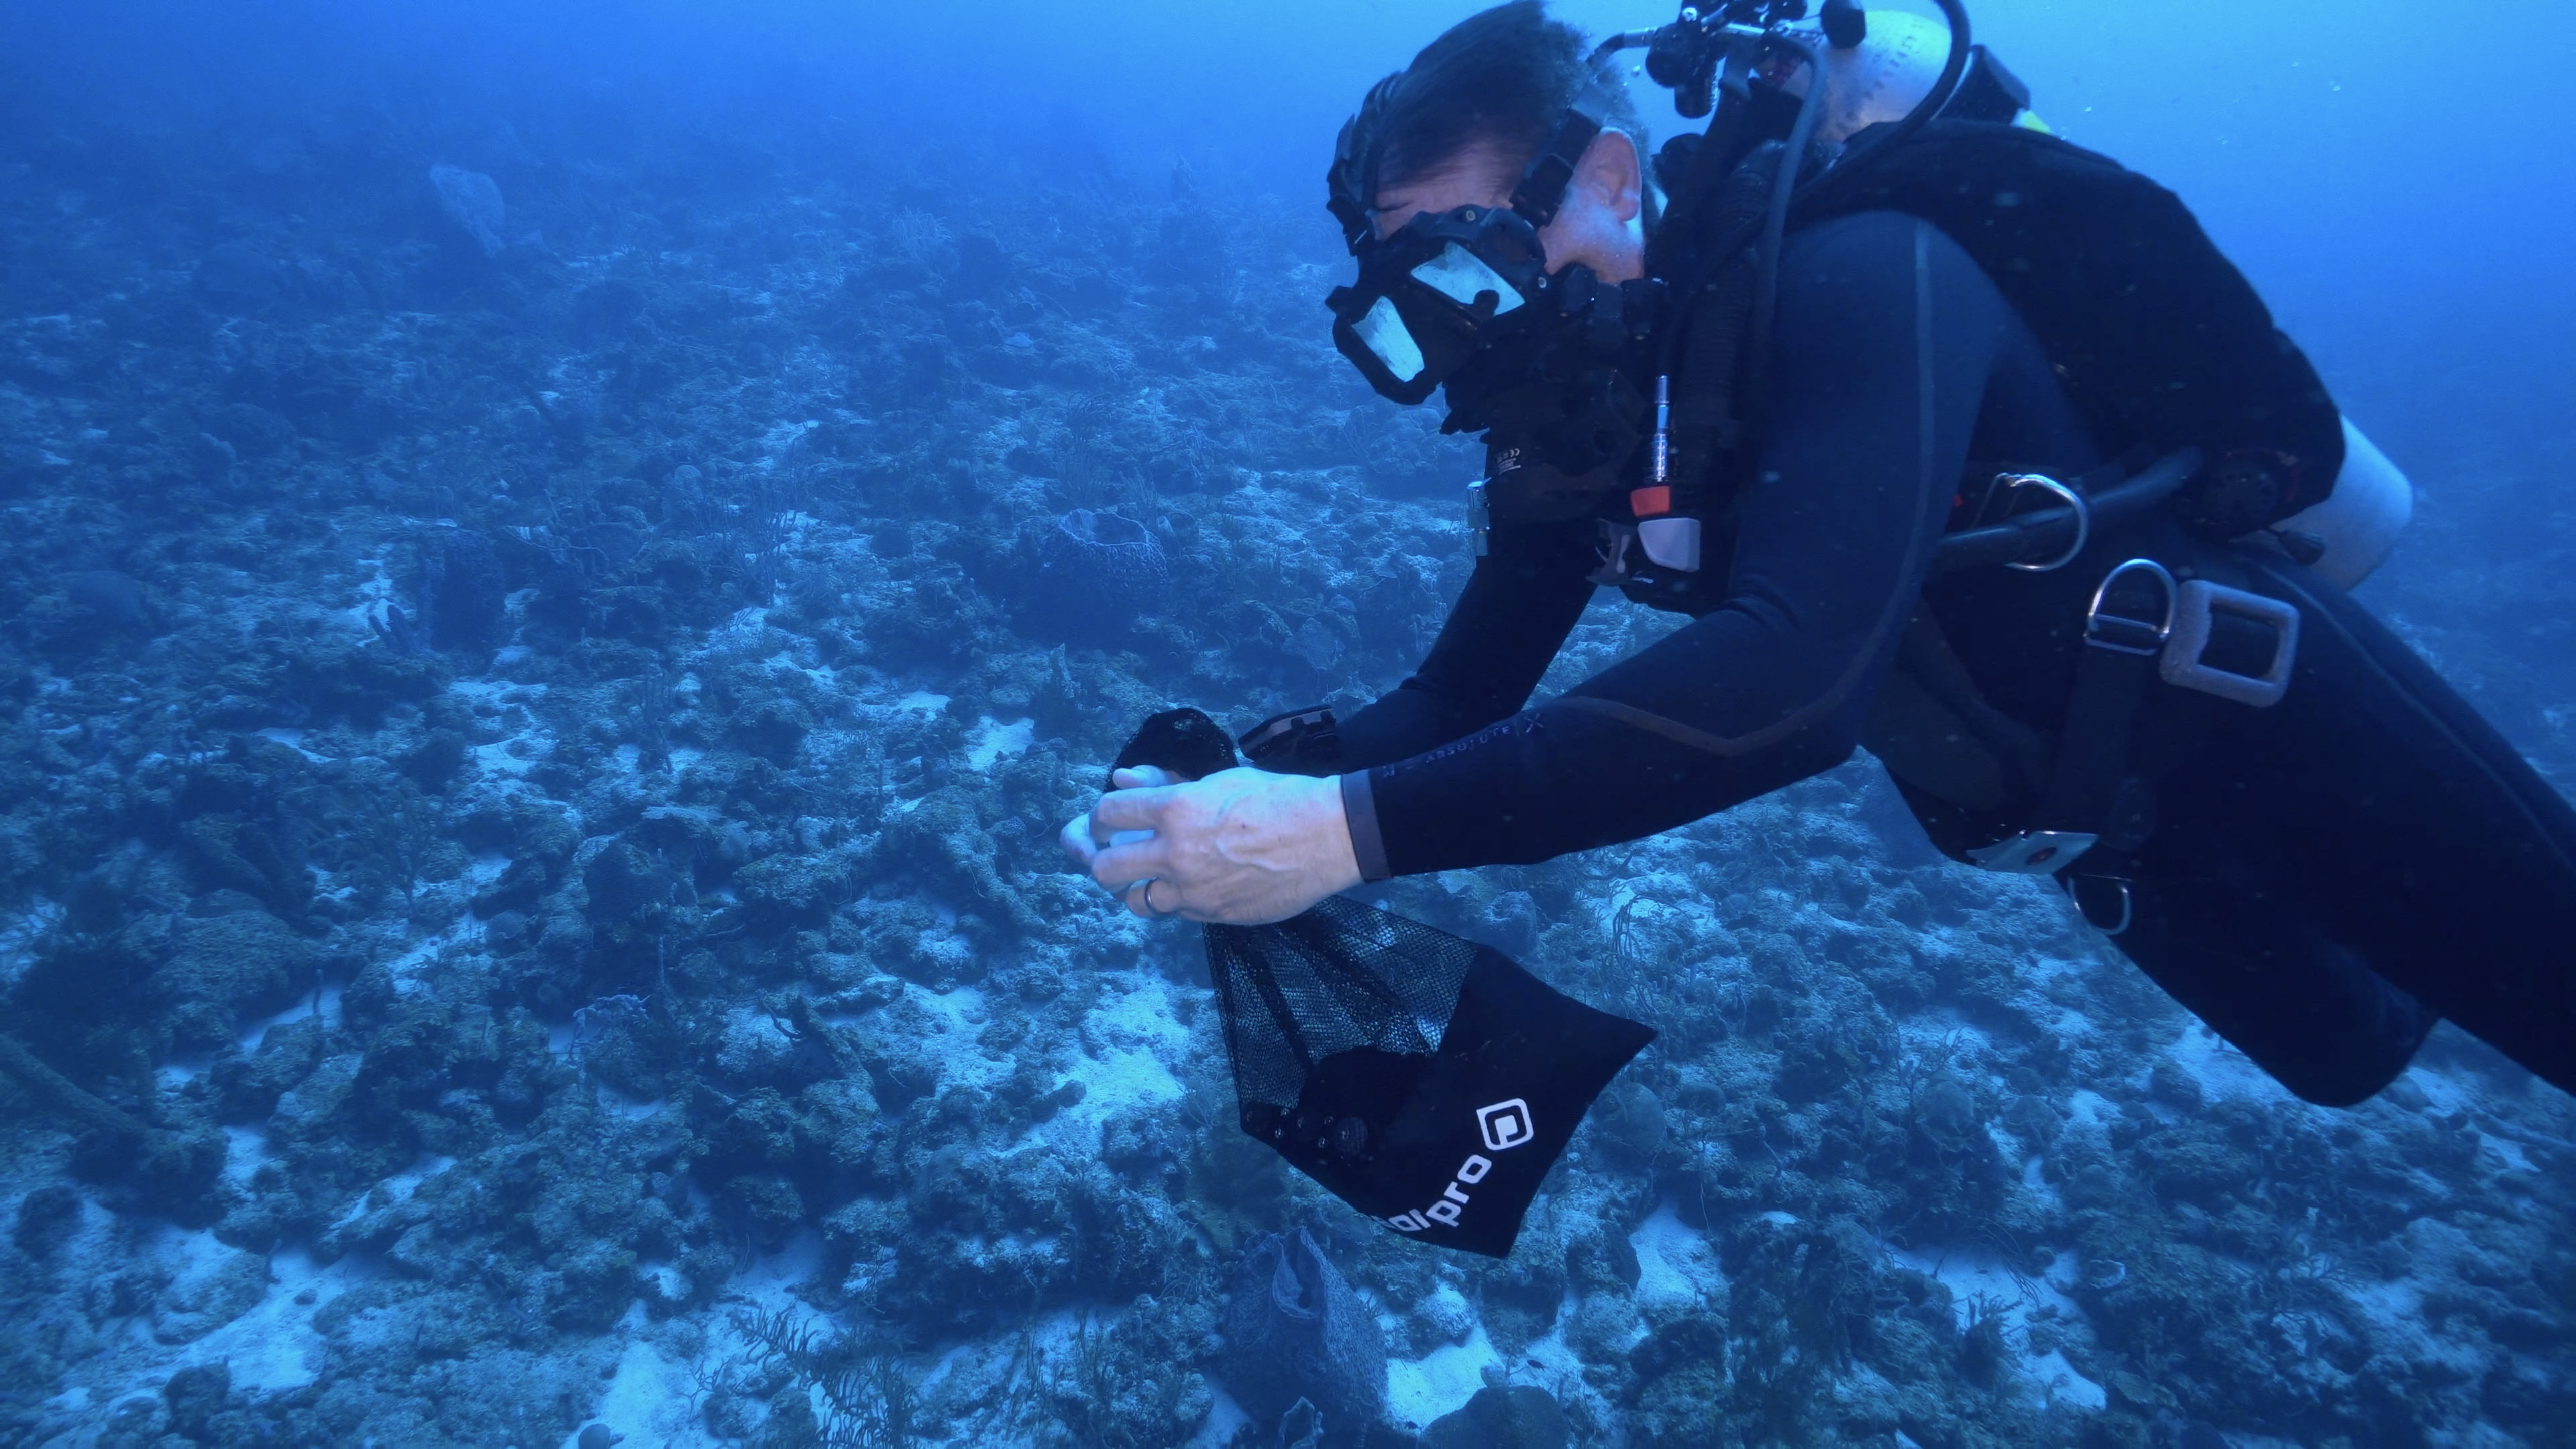 Underwater Fabien Cousteau Curacao 